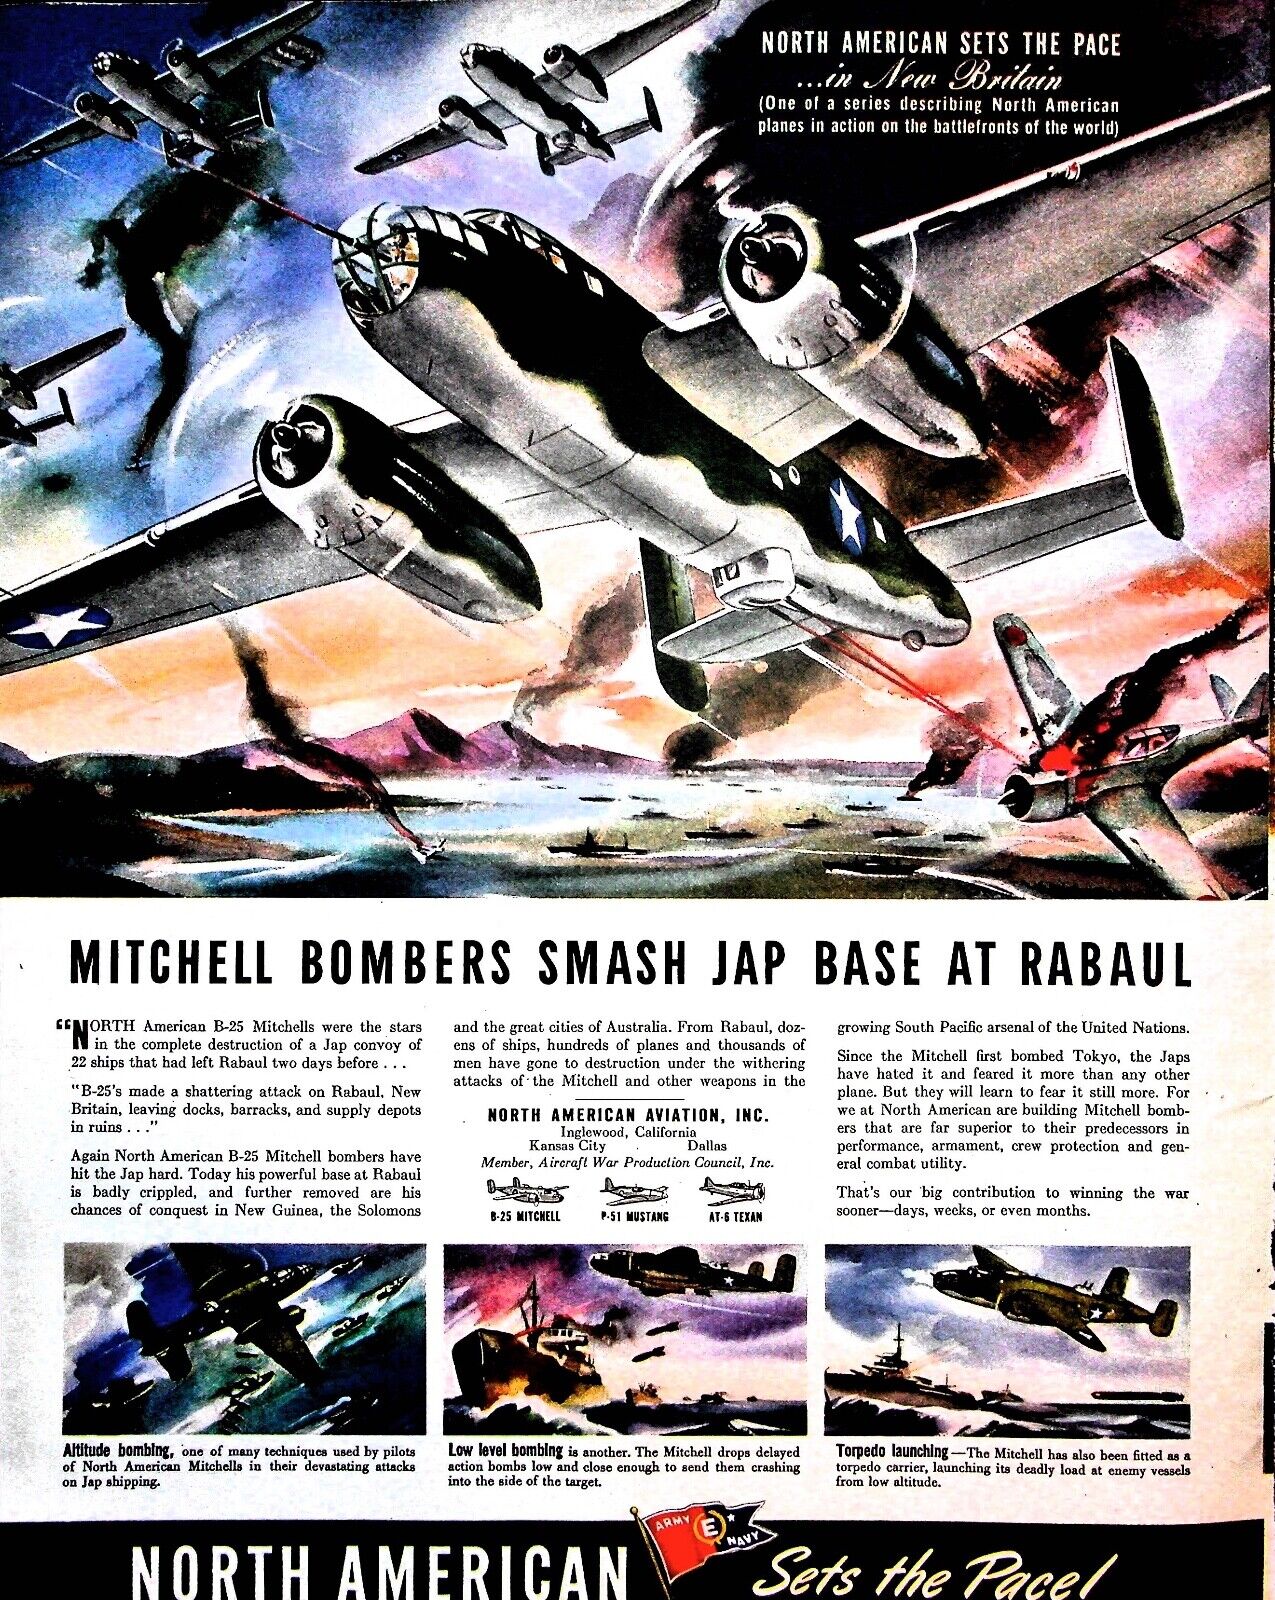 Original 1950s North America Ad: Mitchell bombers